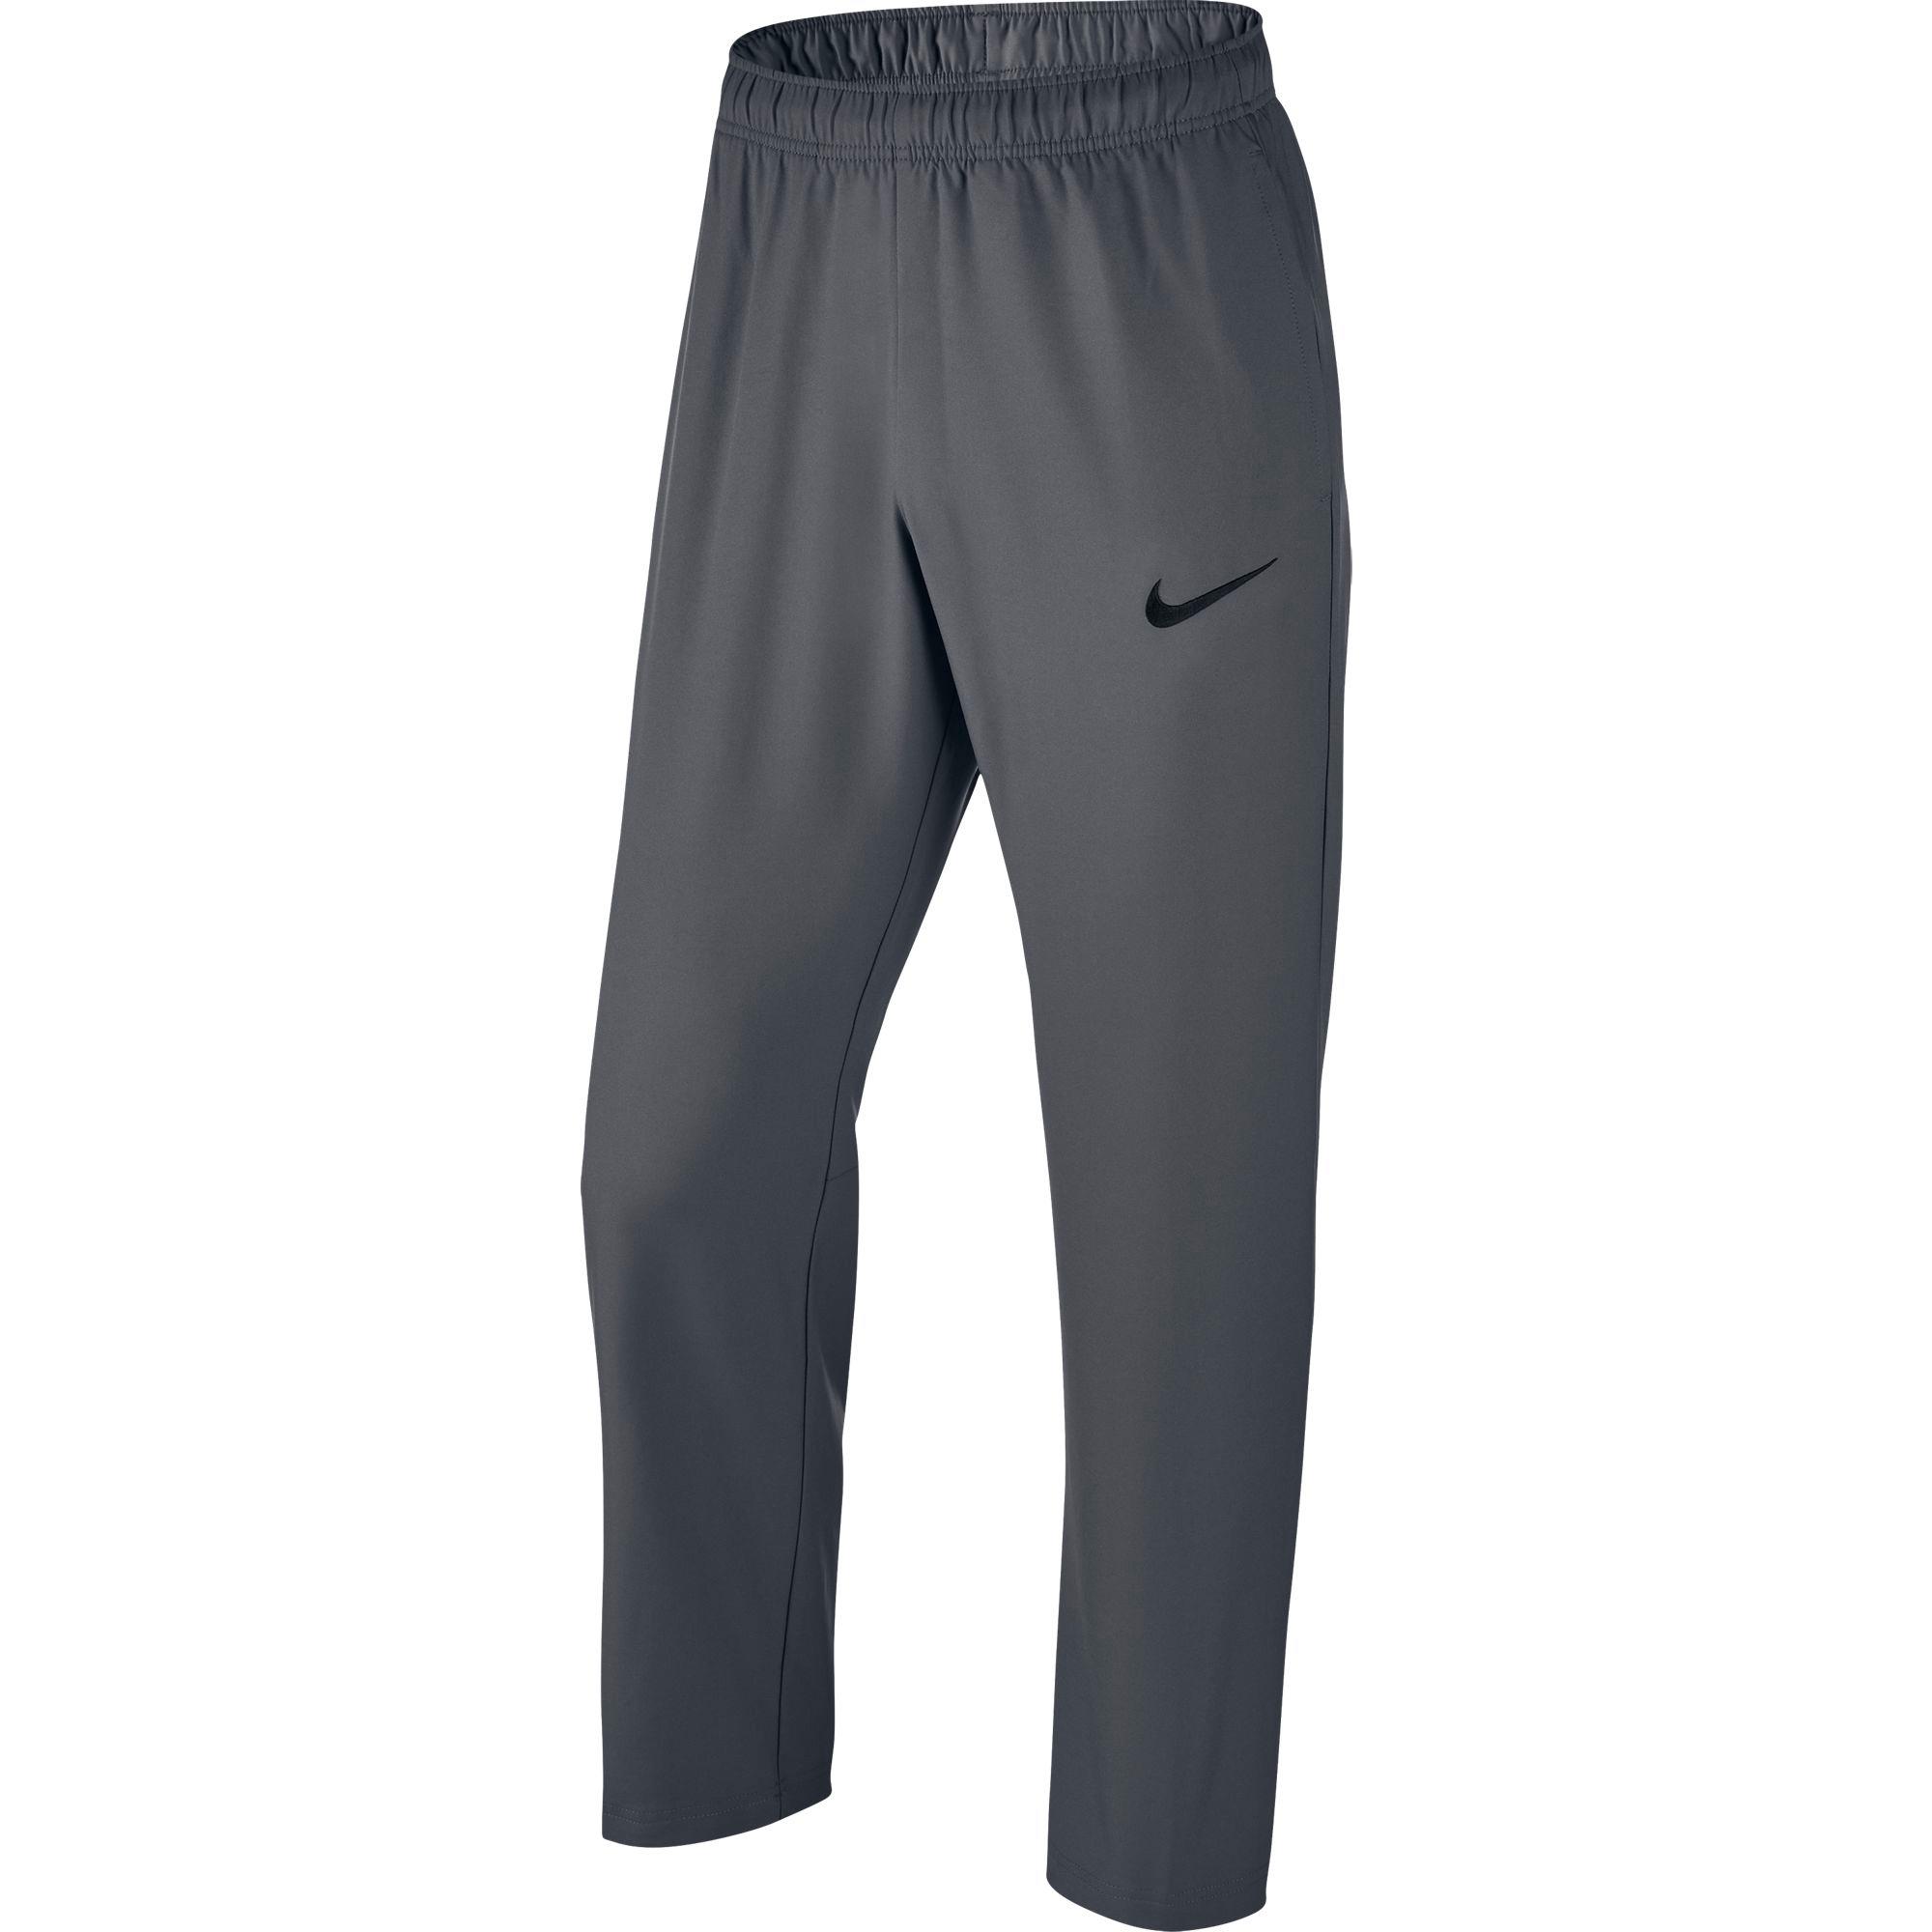 Nike Mens Dry Team Training Pants - Dark Grey - Tennisnuts.com